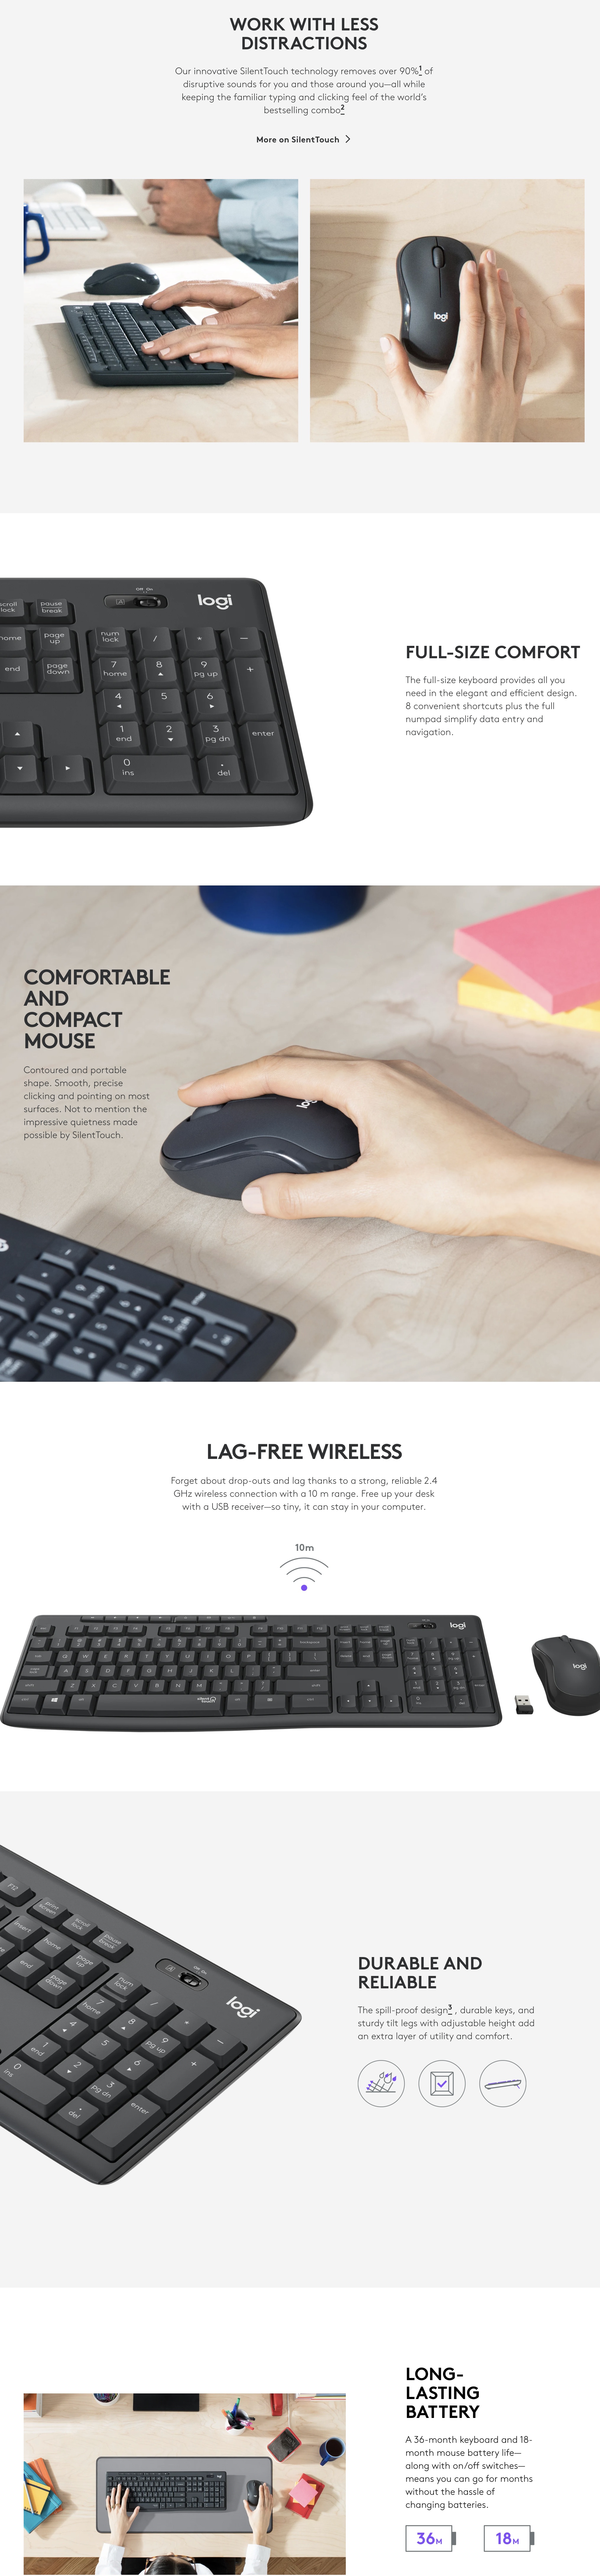 Logitech-MK295-Silent-Wireless-Keyboard-And-Mouse-Combo-Description-2